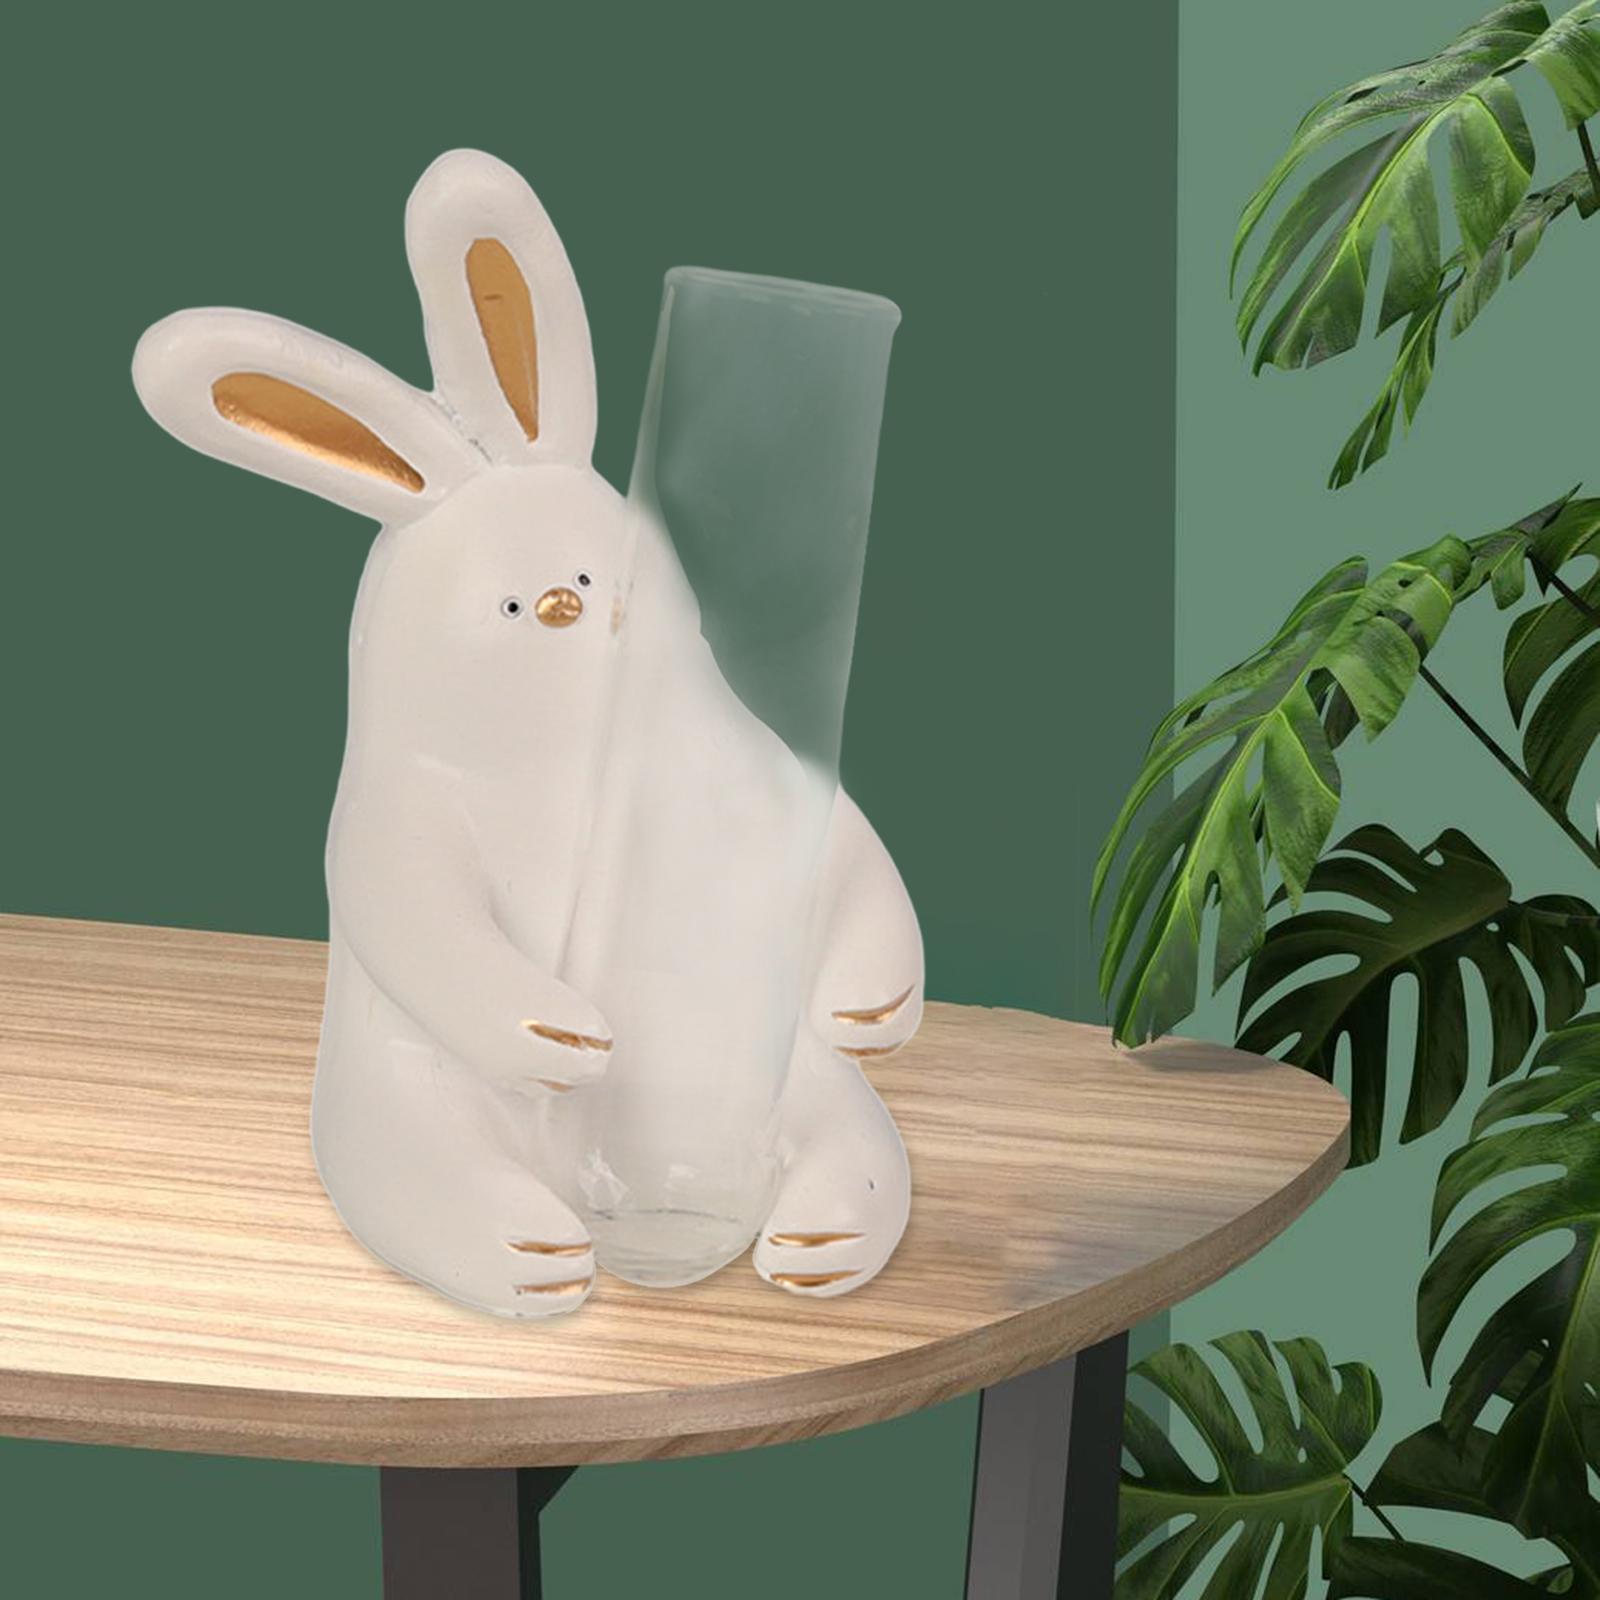 Clear Bud Vase with Animals Figures Flower Vase Home Decor White Rabbit